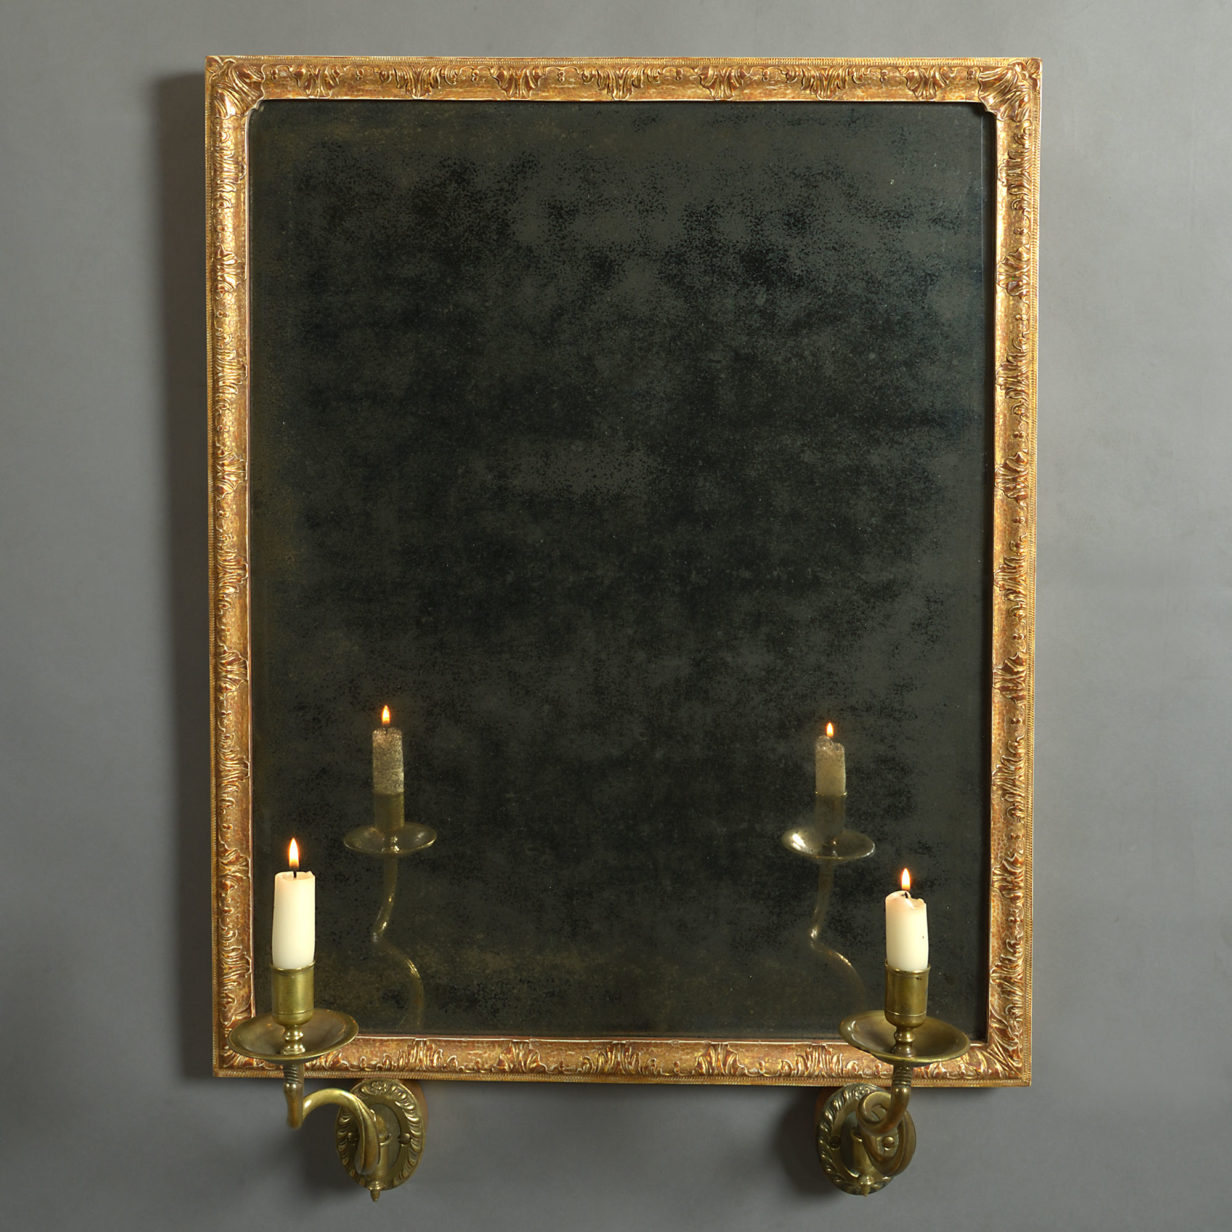 Early 18th century george i period gilt gesso girandole mirror